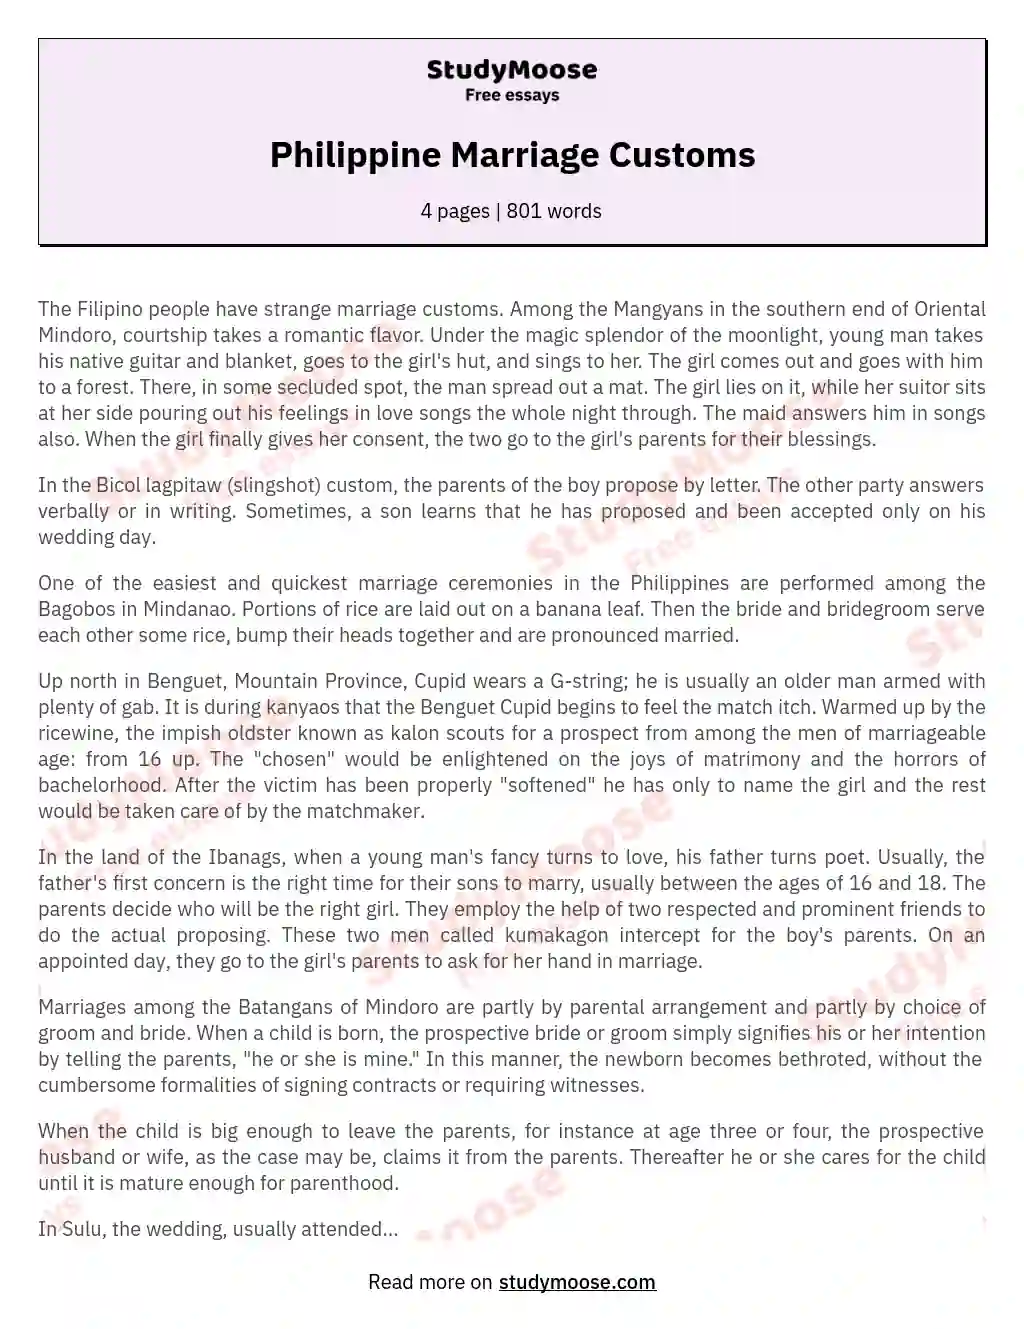 Philippine Marriage Customs essay